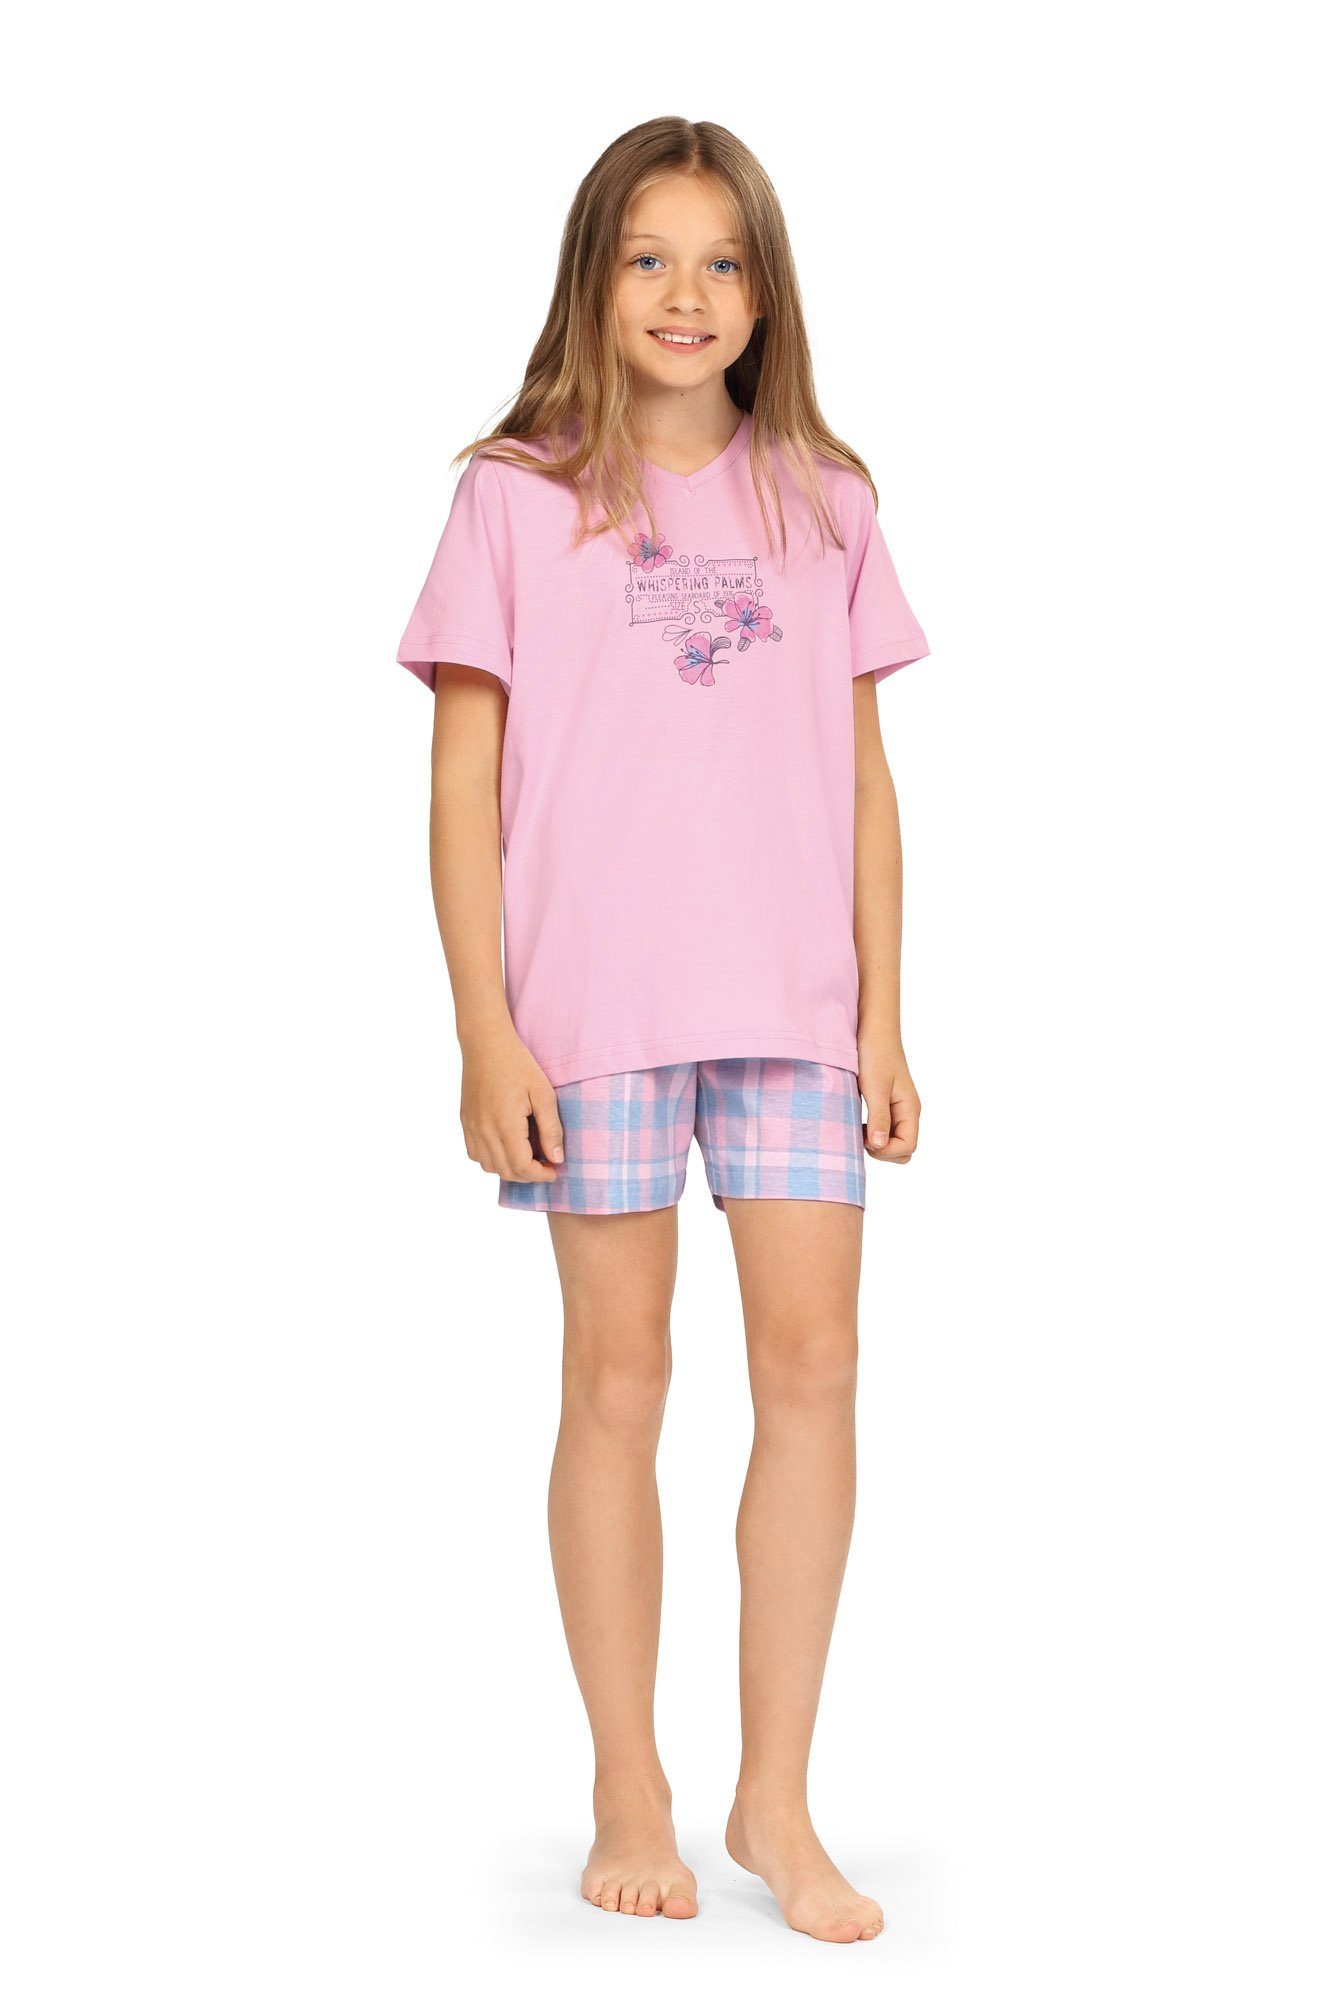 comtessa Schlafanzug Comte Kids (Set, 2 tlg., Set) Mädchen Schlafanzug Pyjama Shorty Kurzarm Pastell Baumwolle soft rosa | Pyjama-Sets